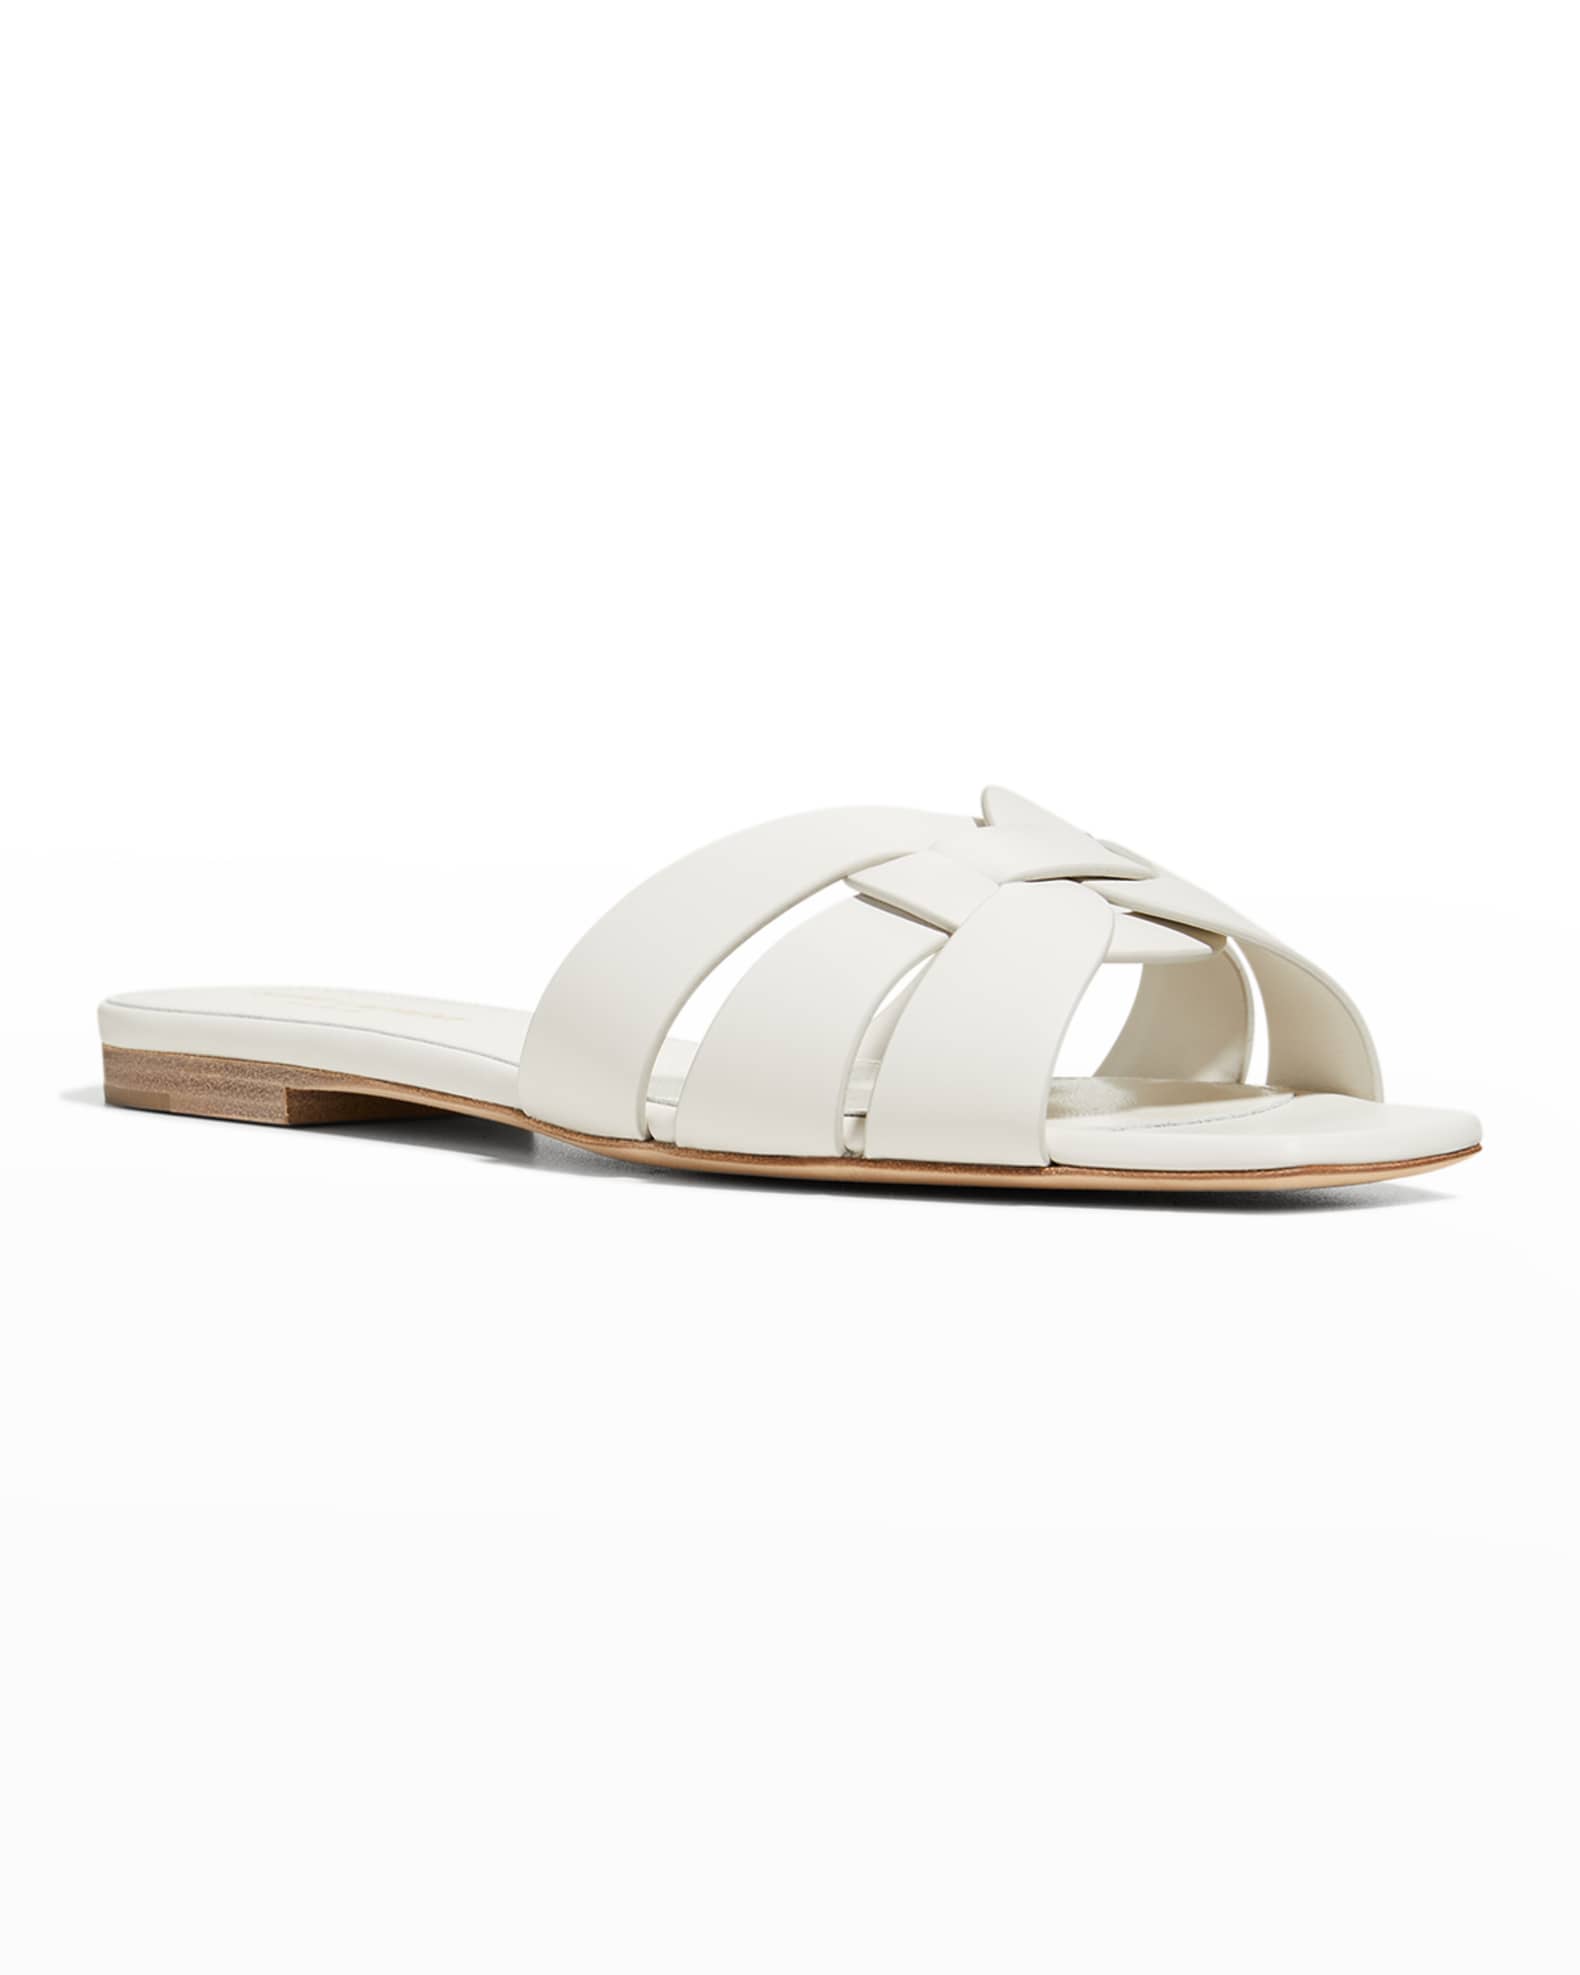 Saint Laurent Woven Leather Flat Slide Sandals | Neiman Marcus